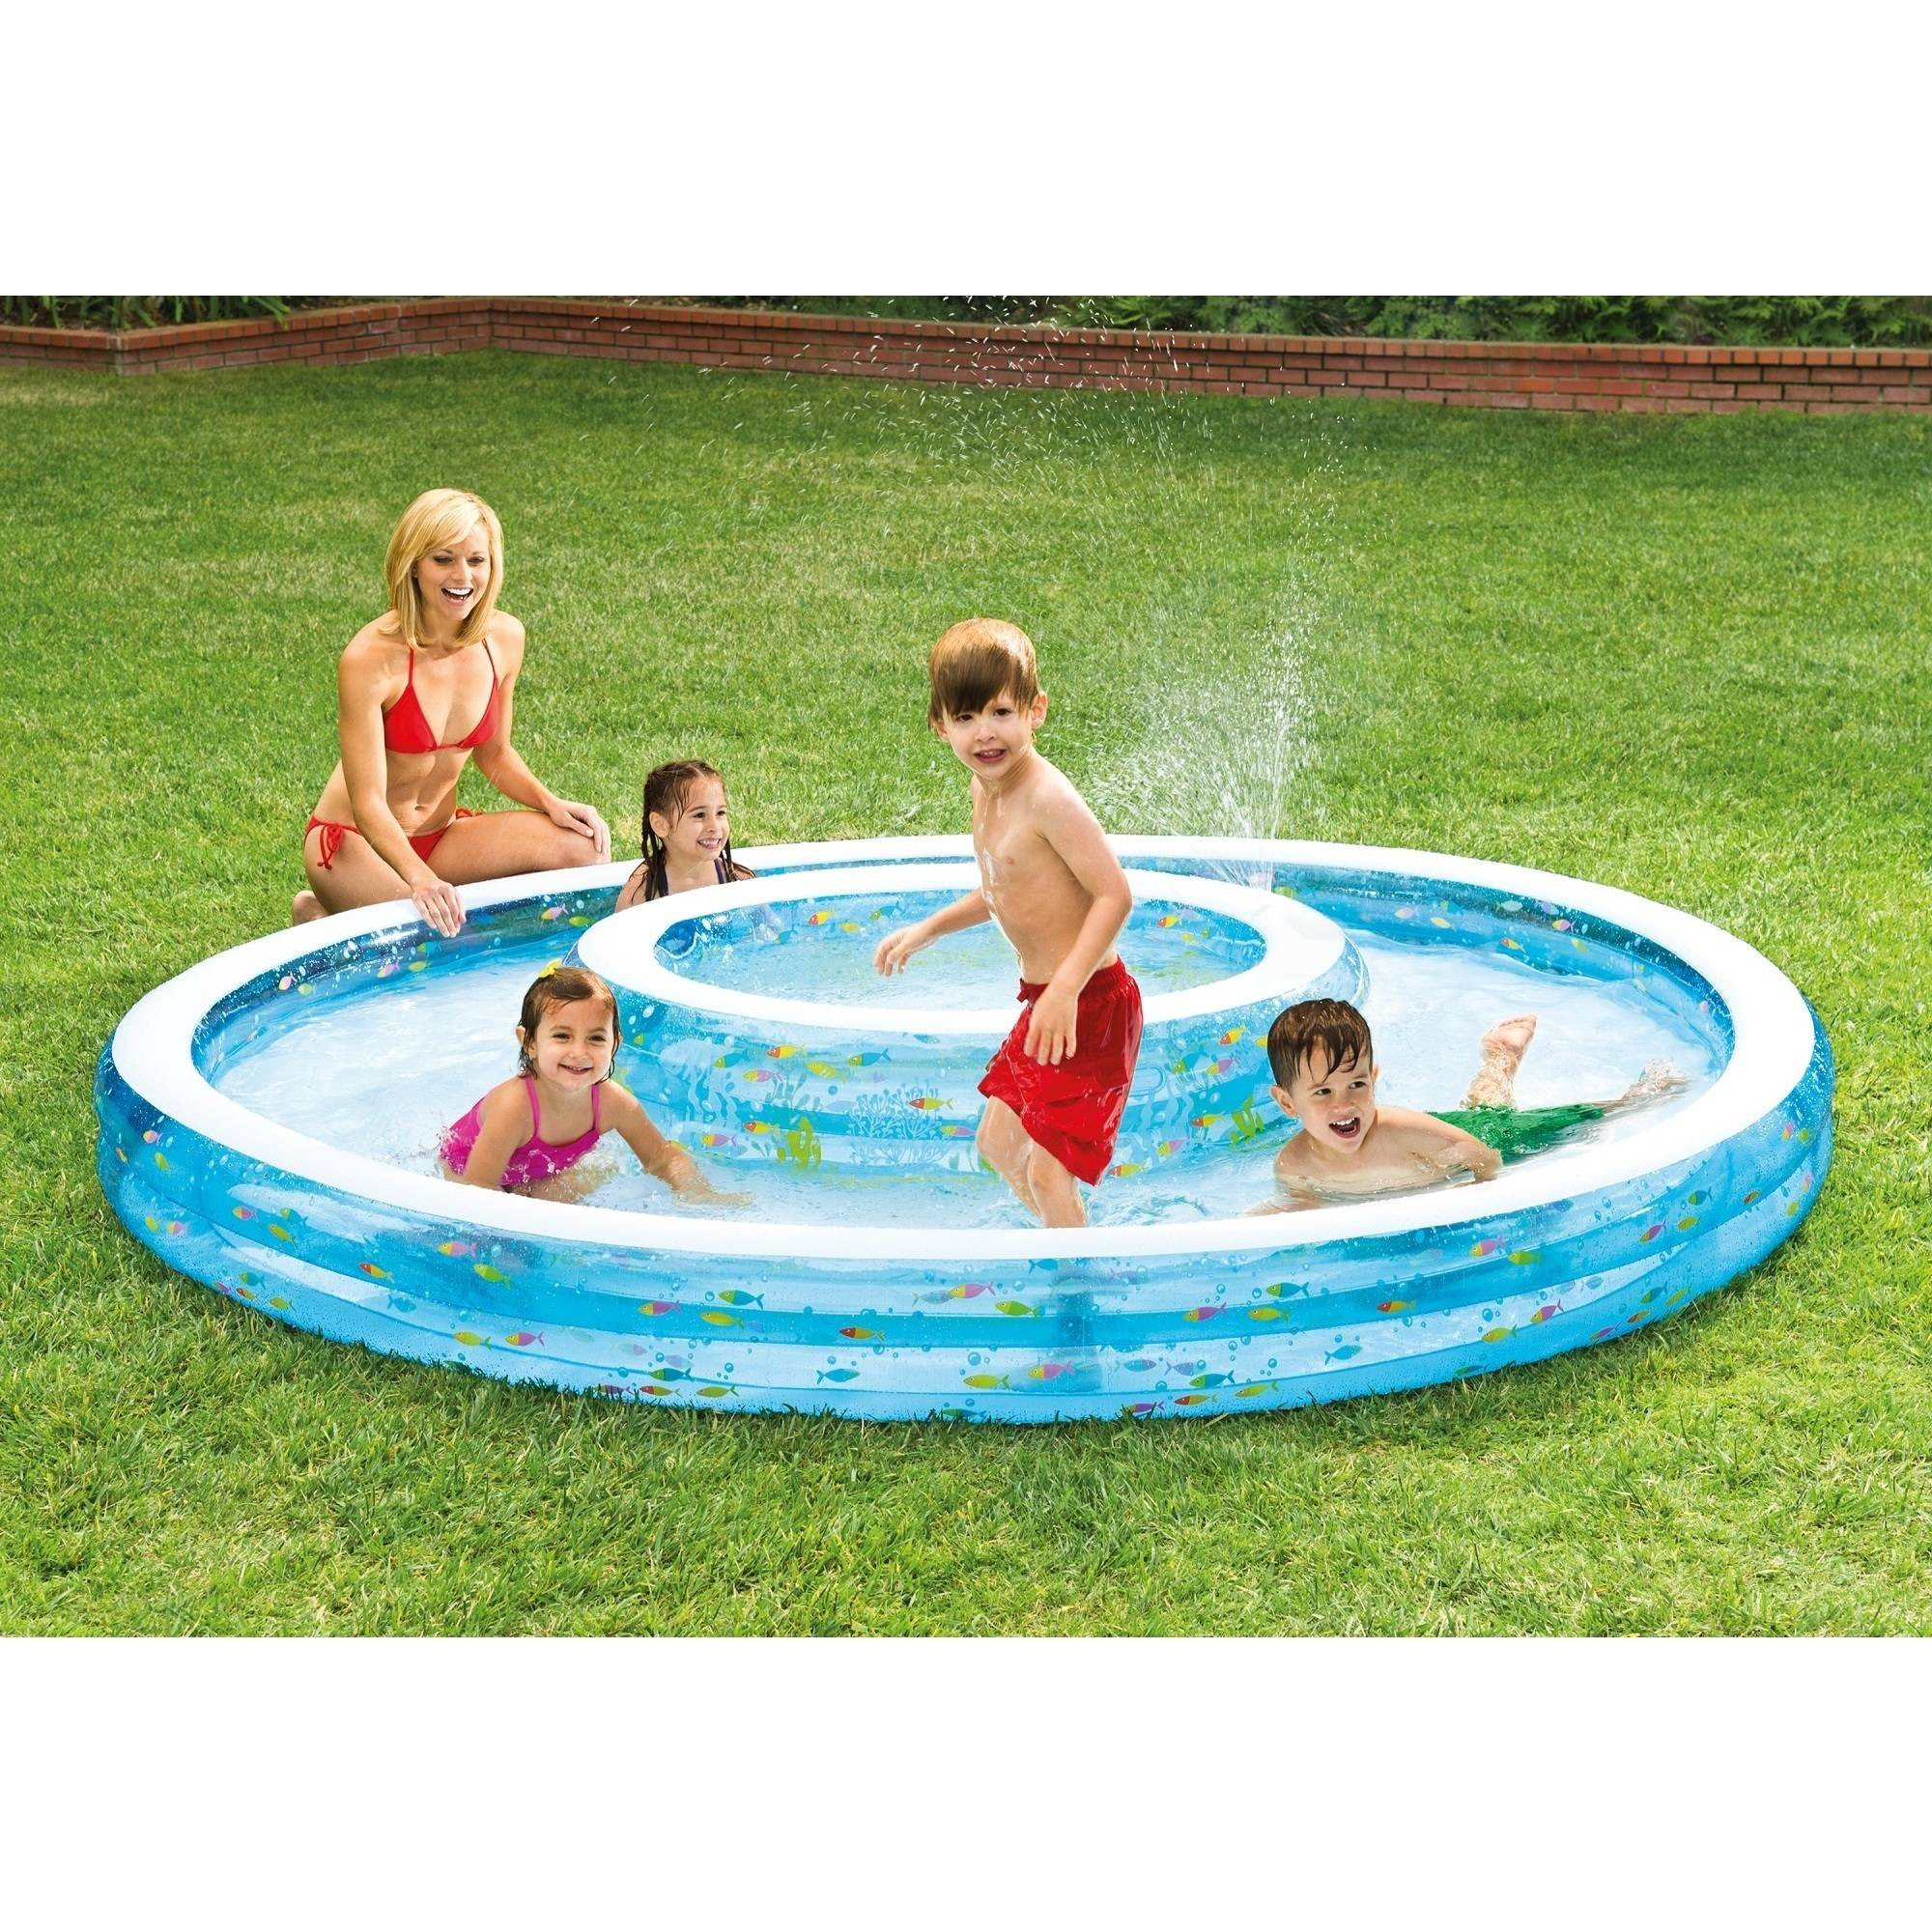 Kids Outdoor Pool
 Well Pool Inflatable Wishing Sprayer Plus Swim Center